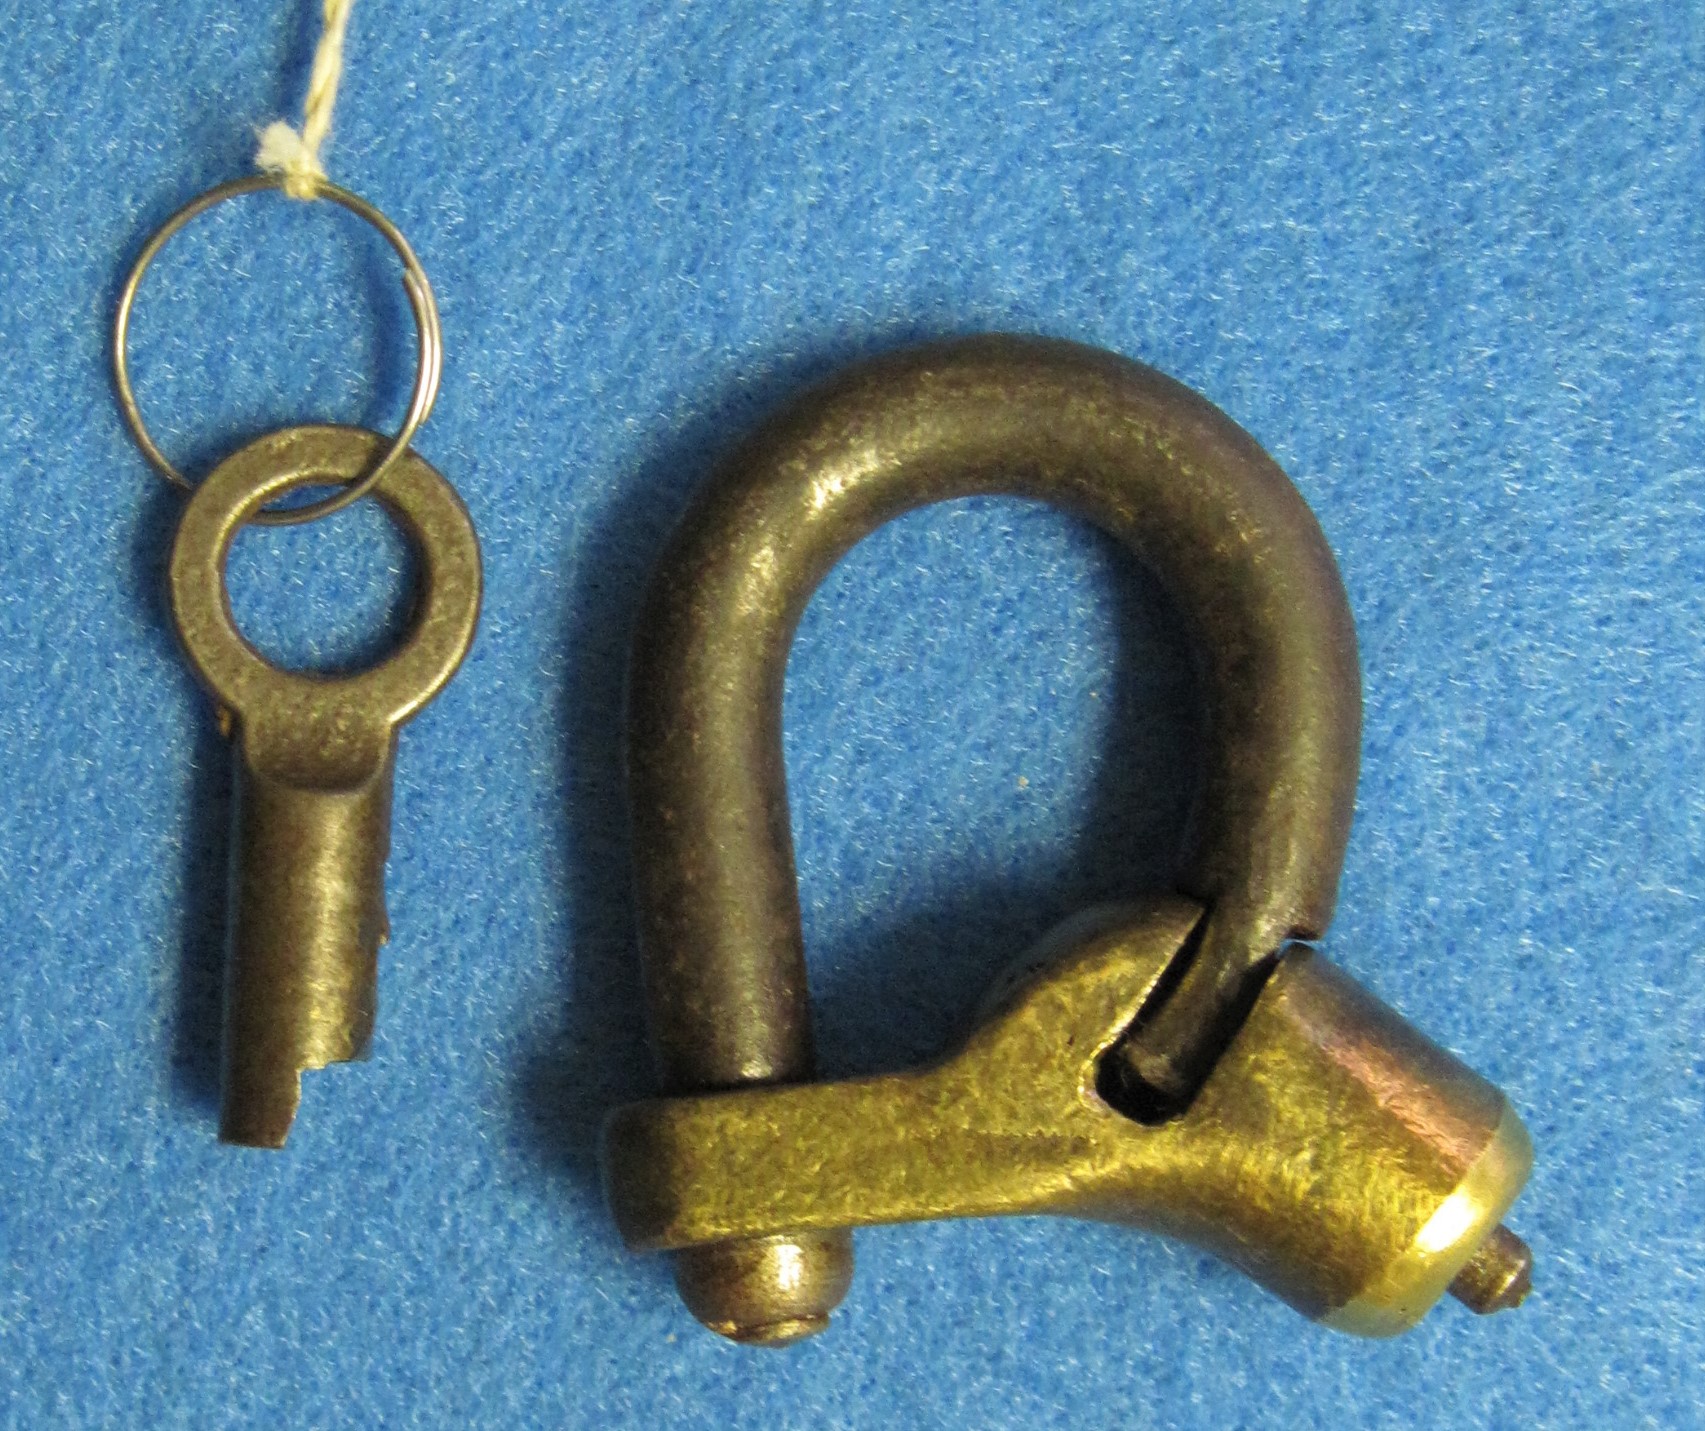 Unusual screw type padlock